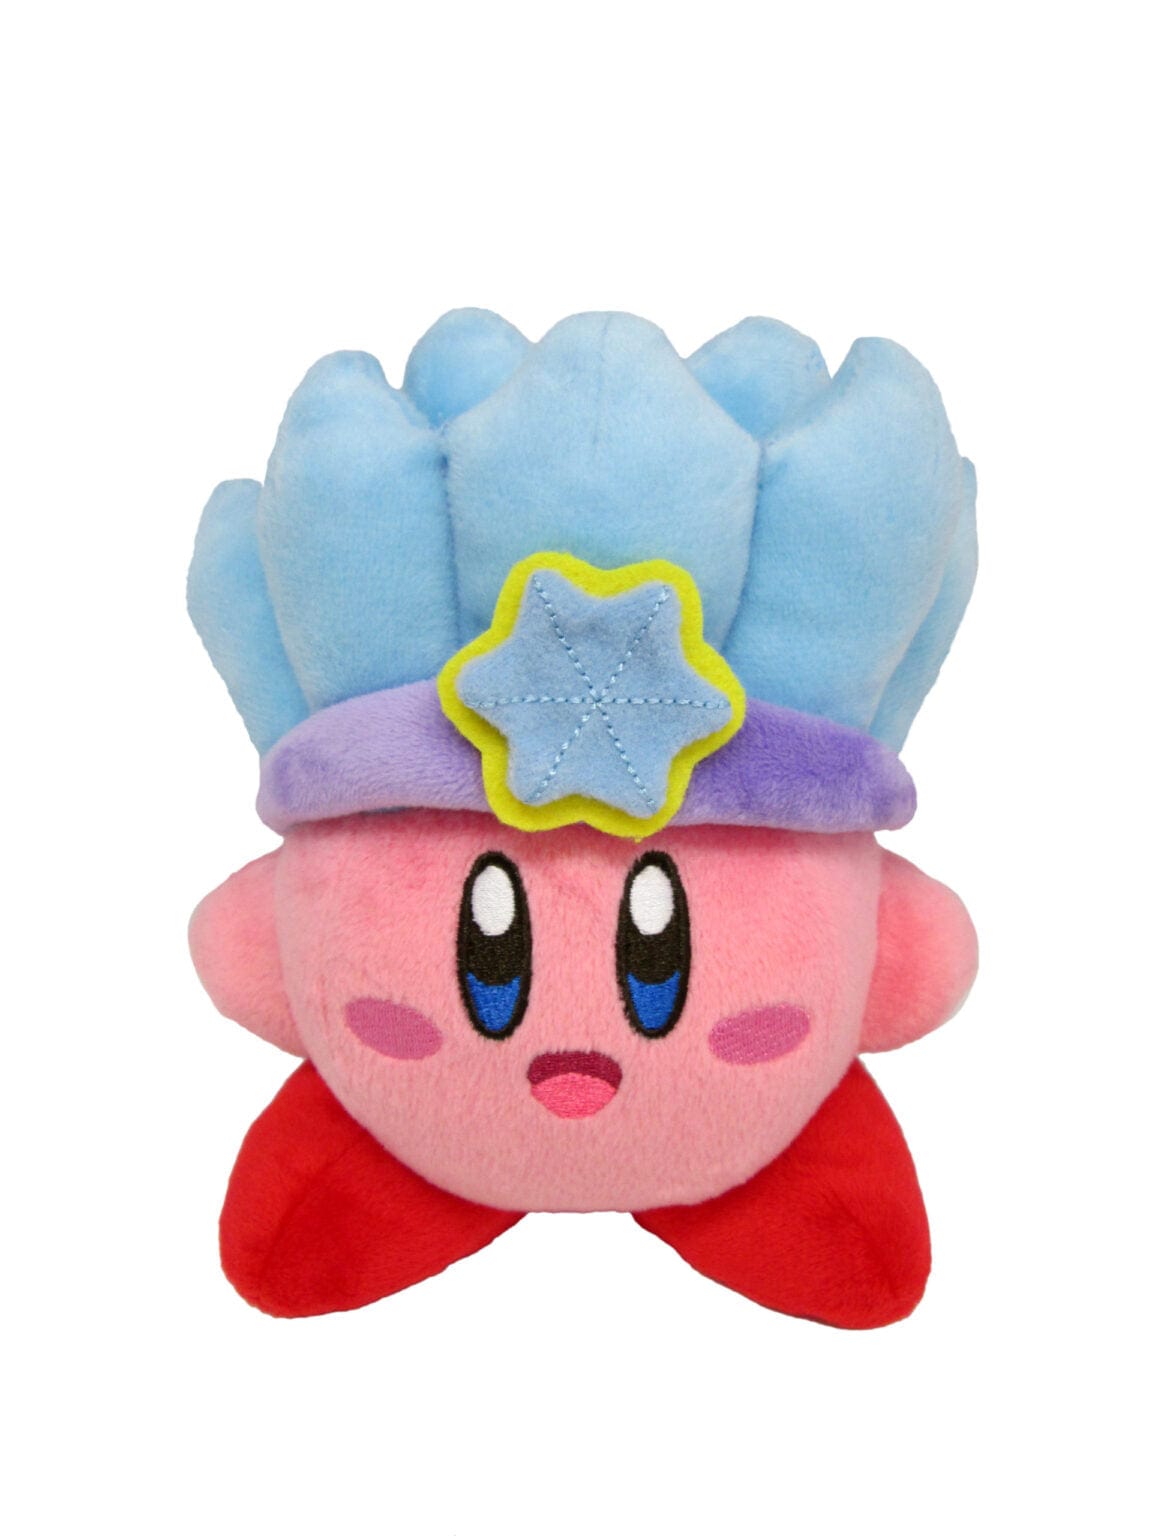 Little Buddy Kirby 5" Ice Plush Kawaii Gifts 819996016274